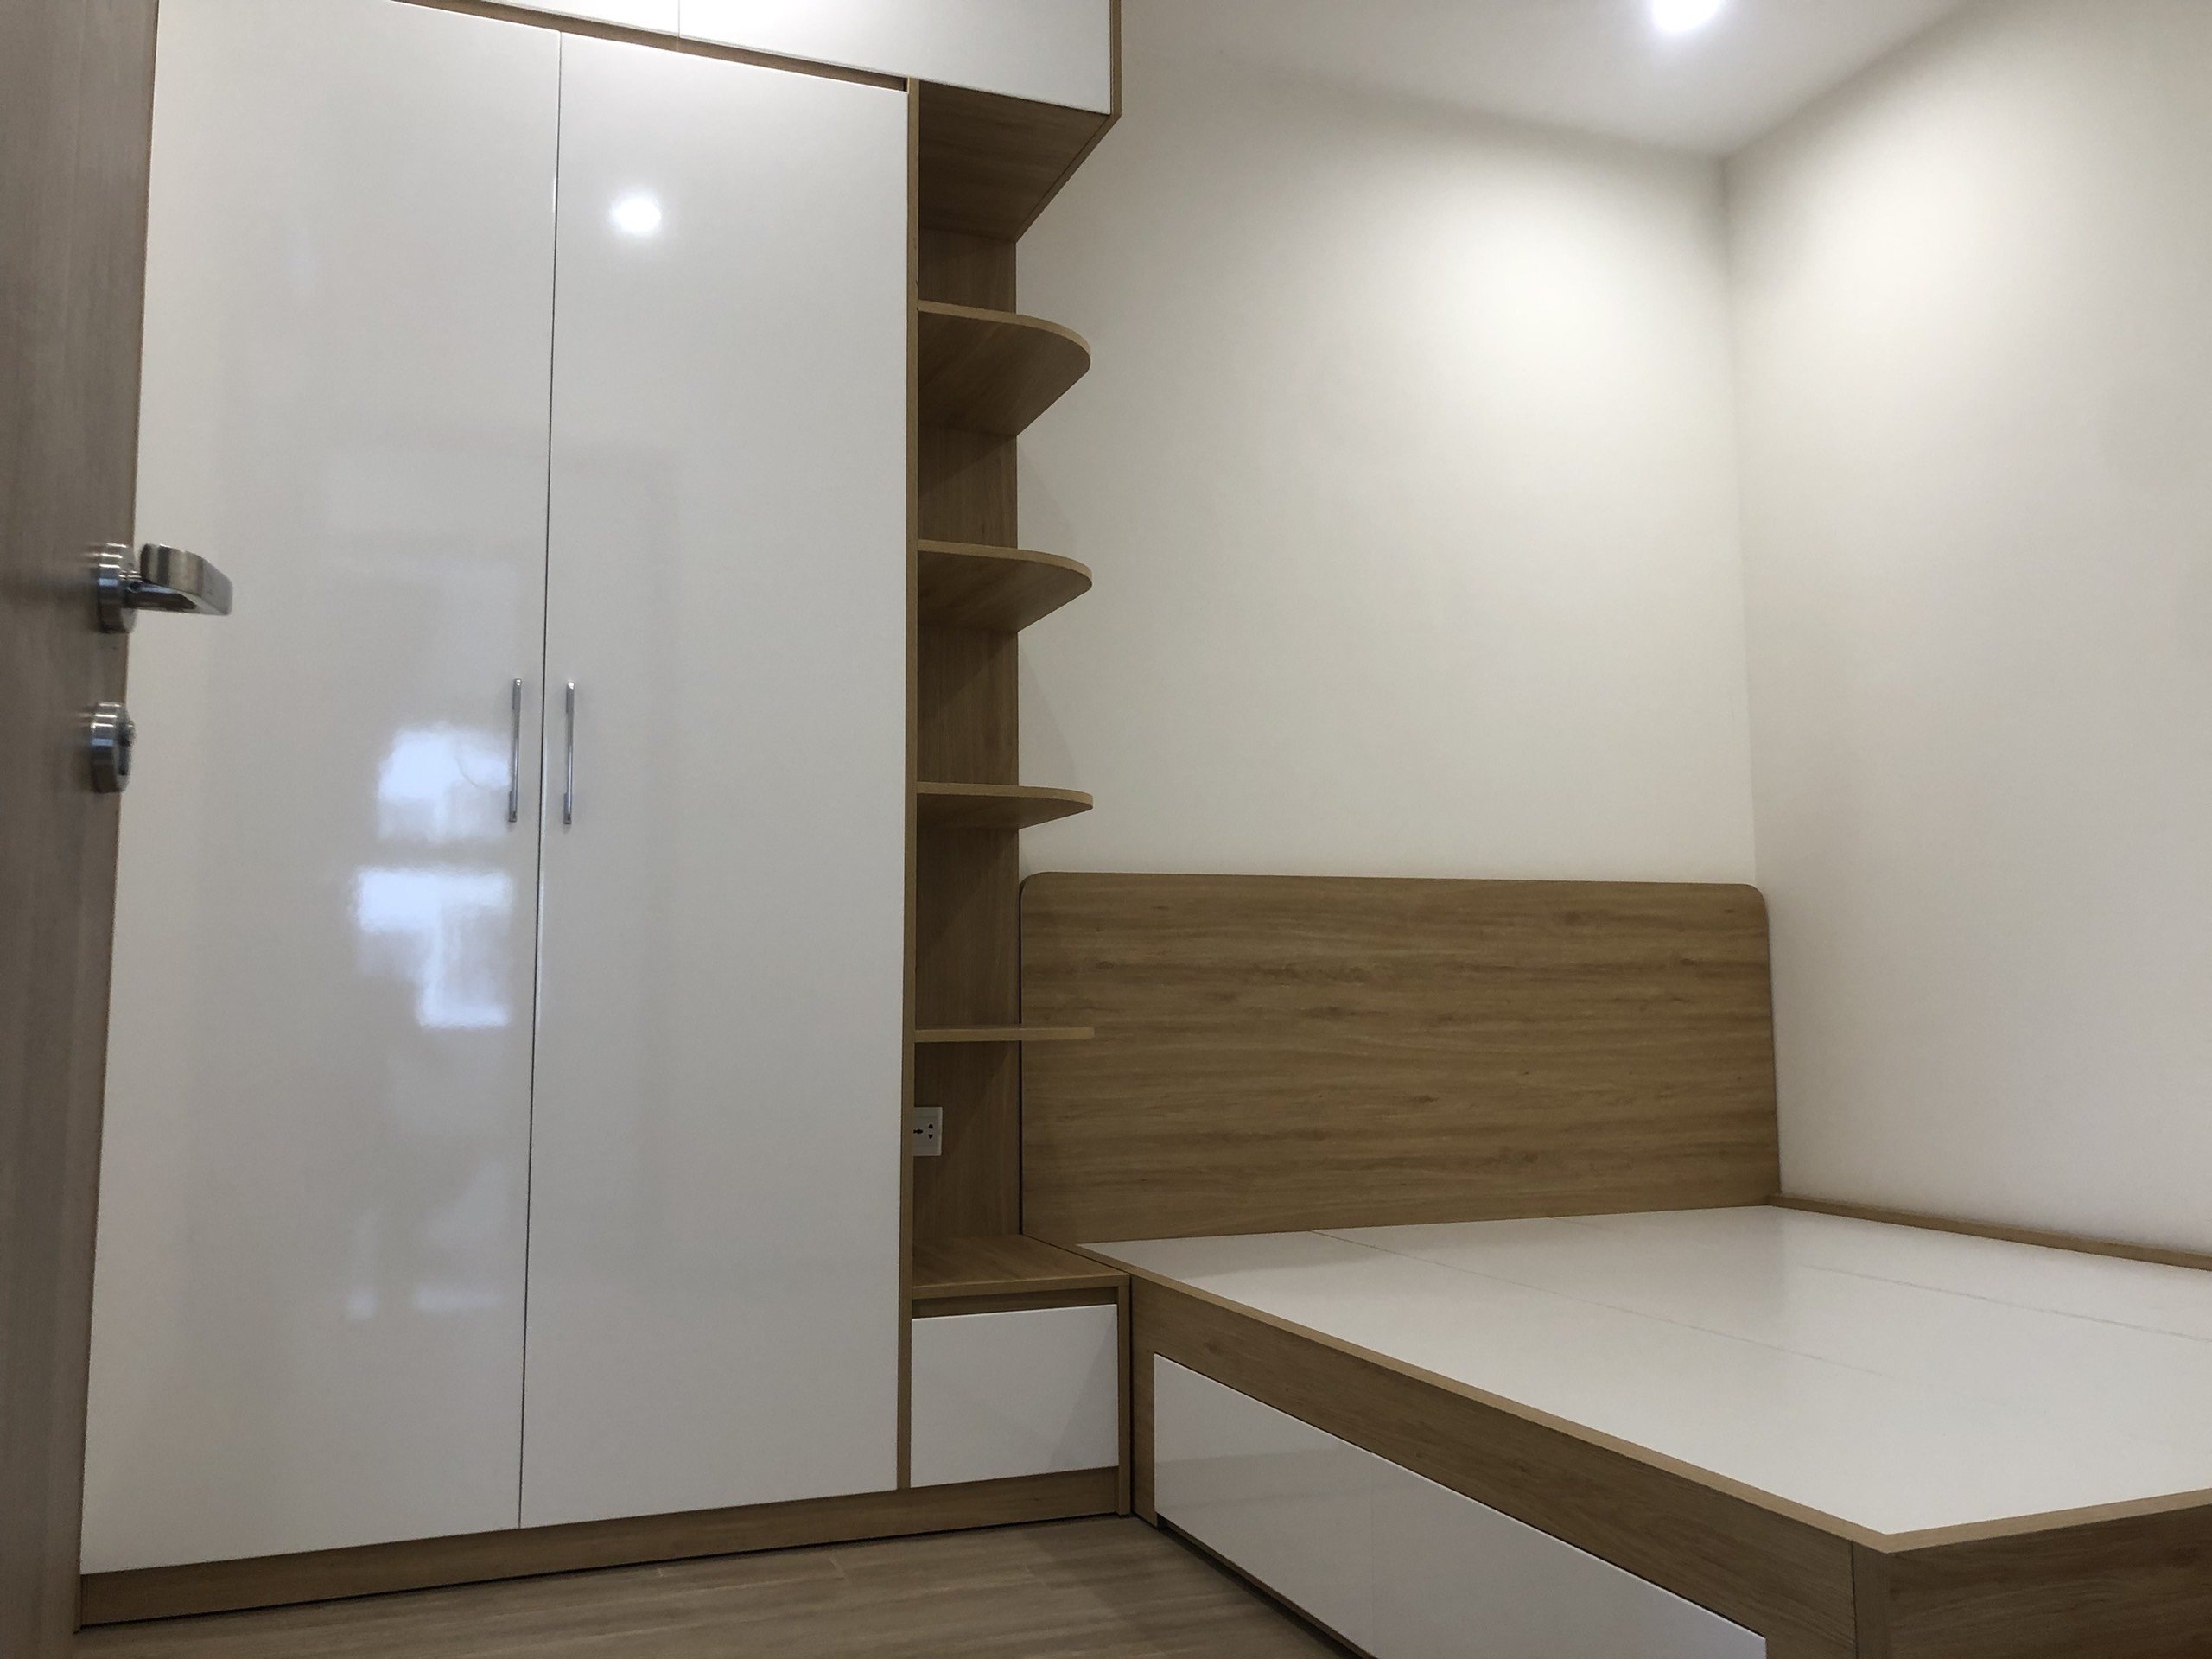 New rental 1 bedroom apartment in Vinhomes Ocean Park S212 for rent 4